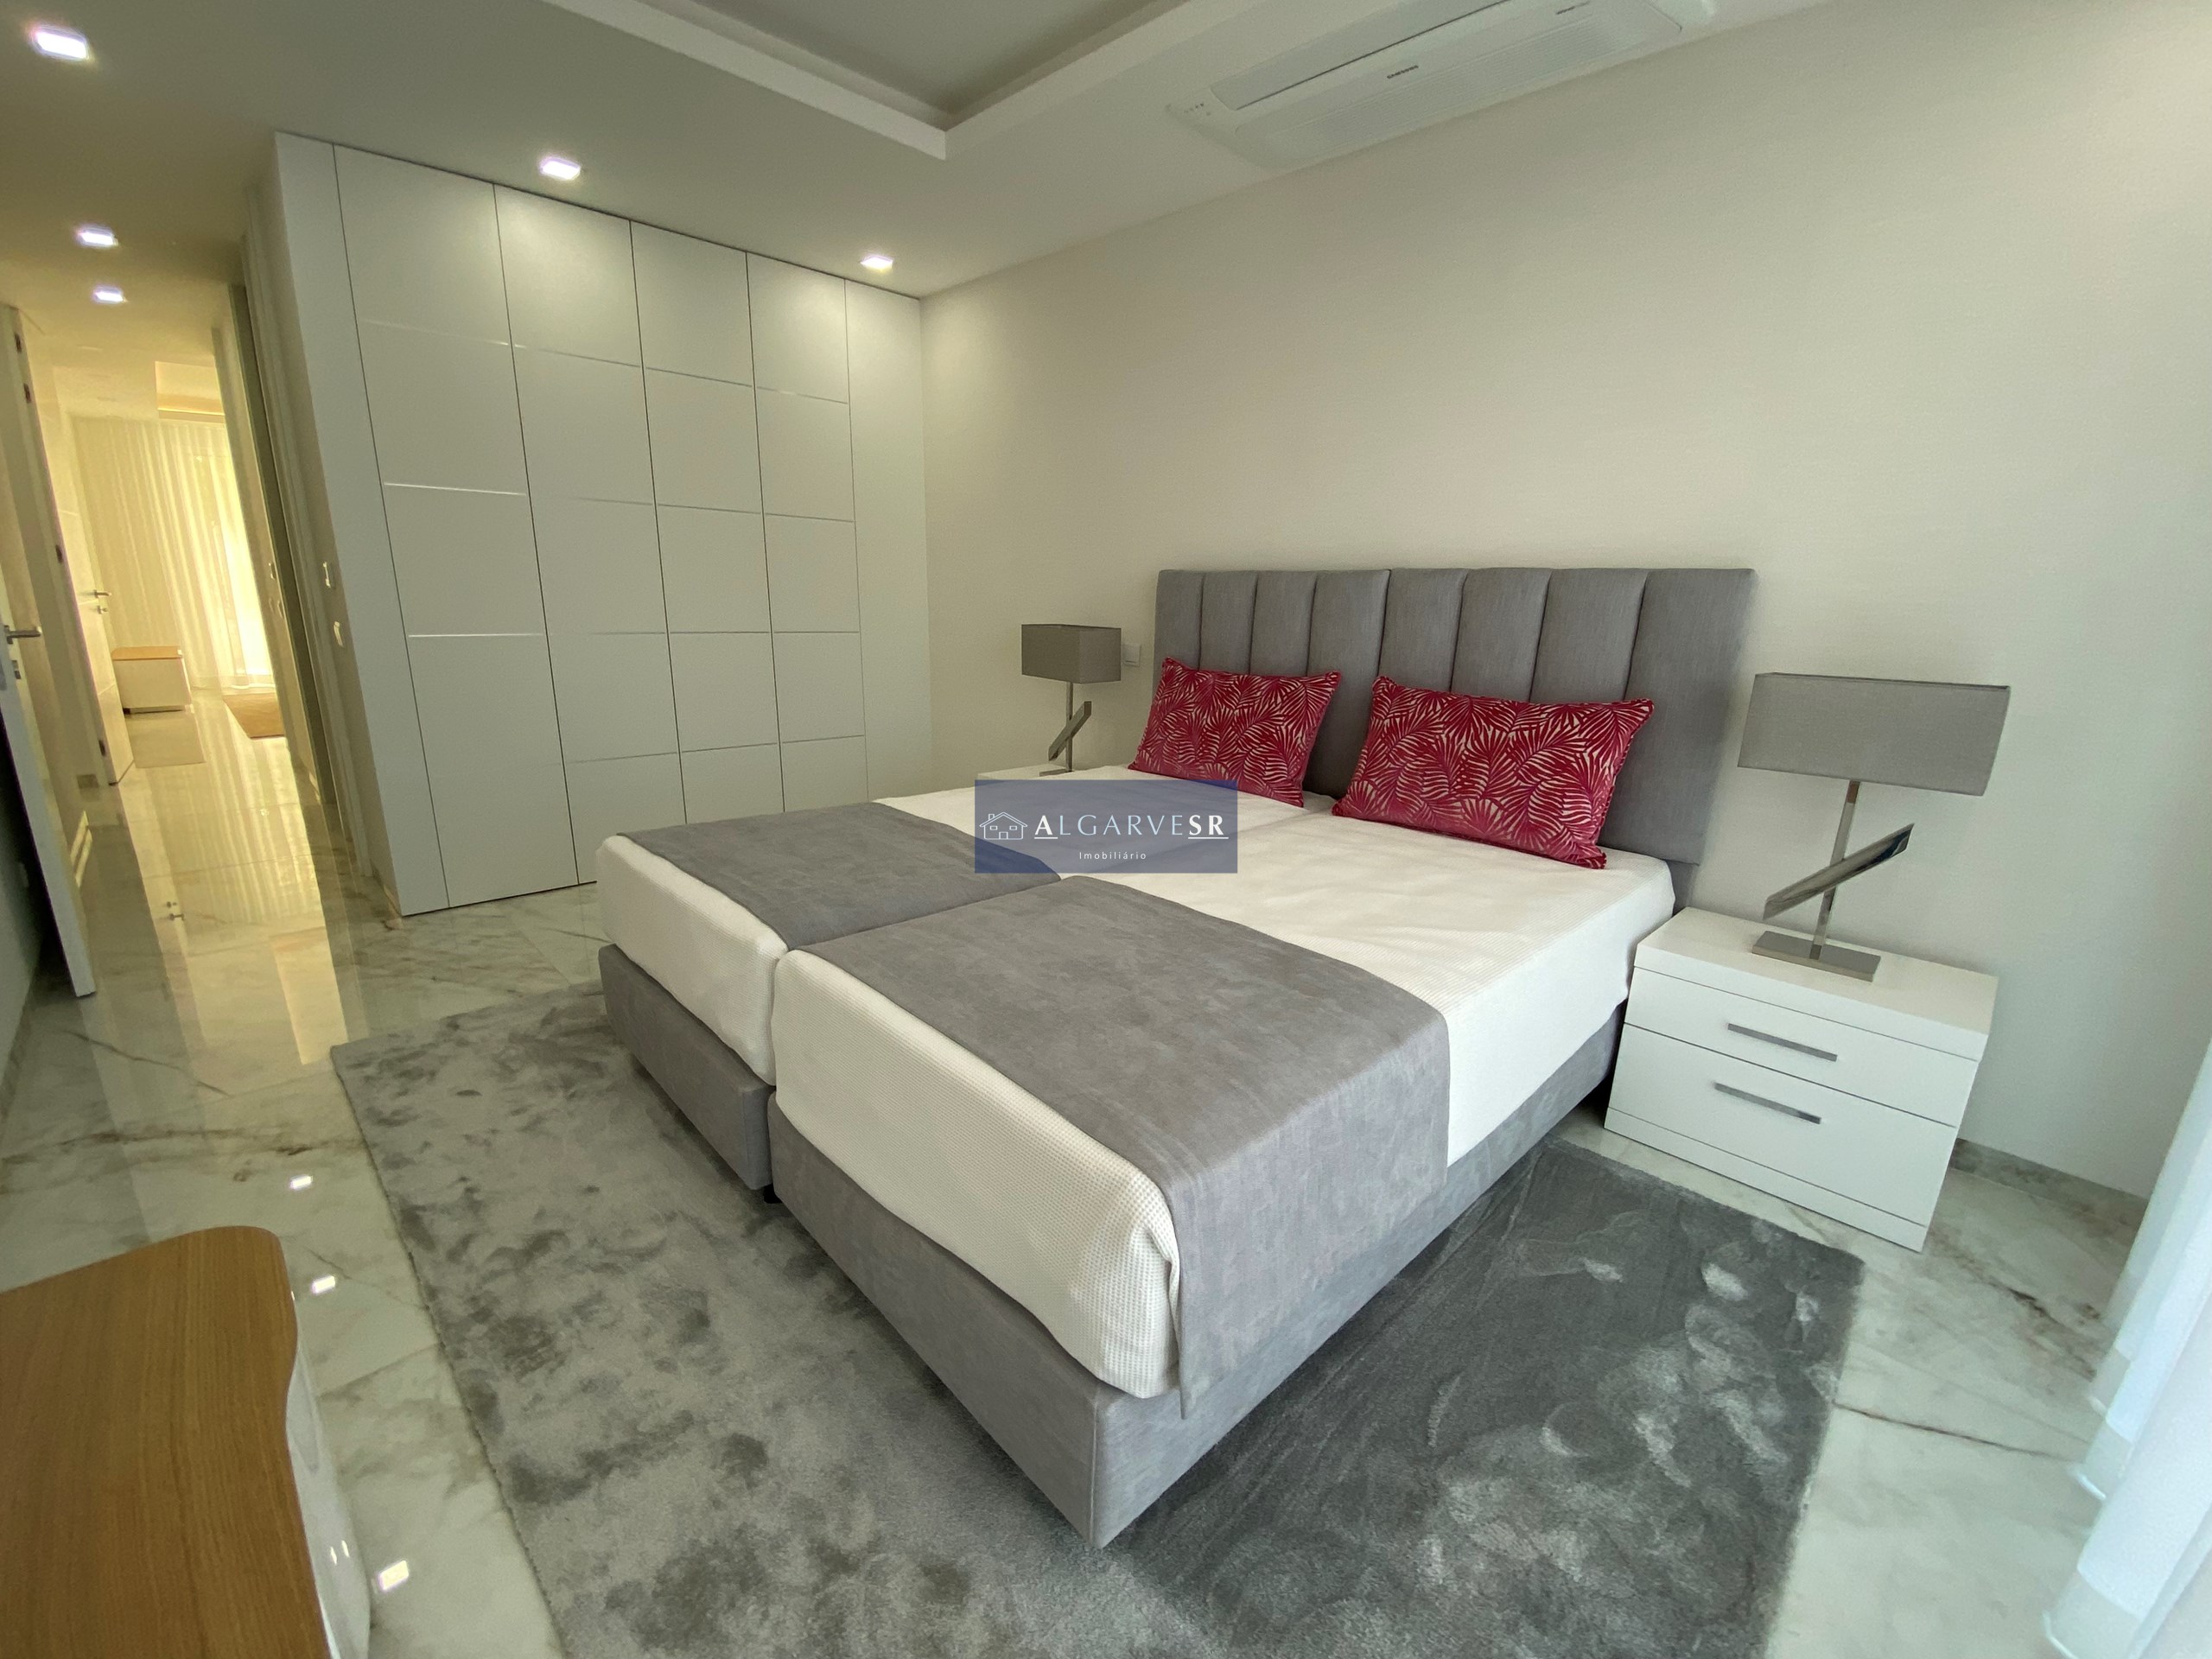 Lagos - Apartamento Novo T2 condominio de luxo c/ piscina